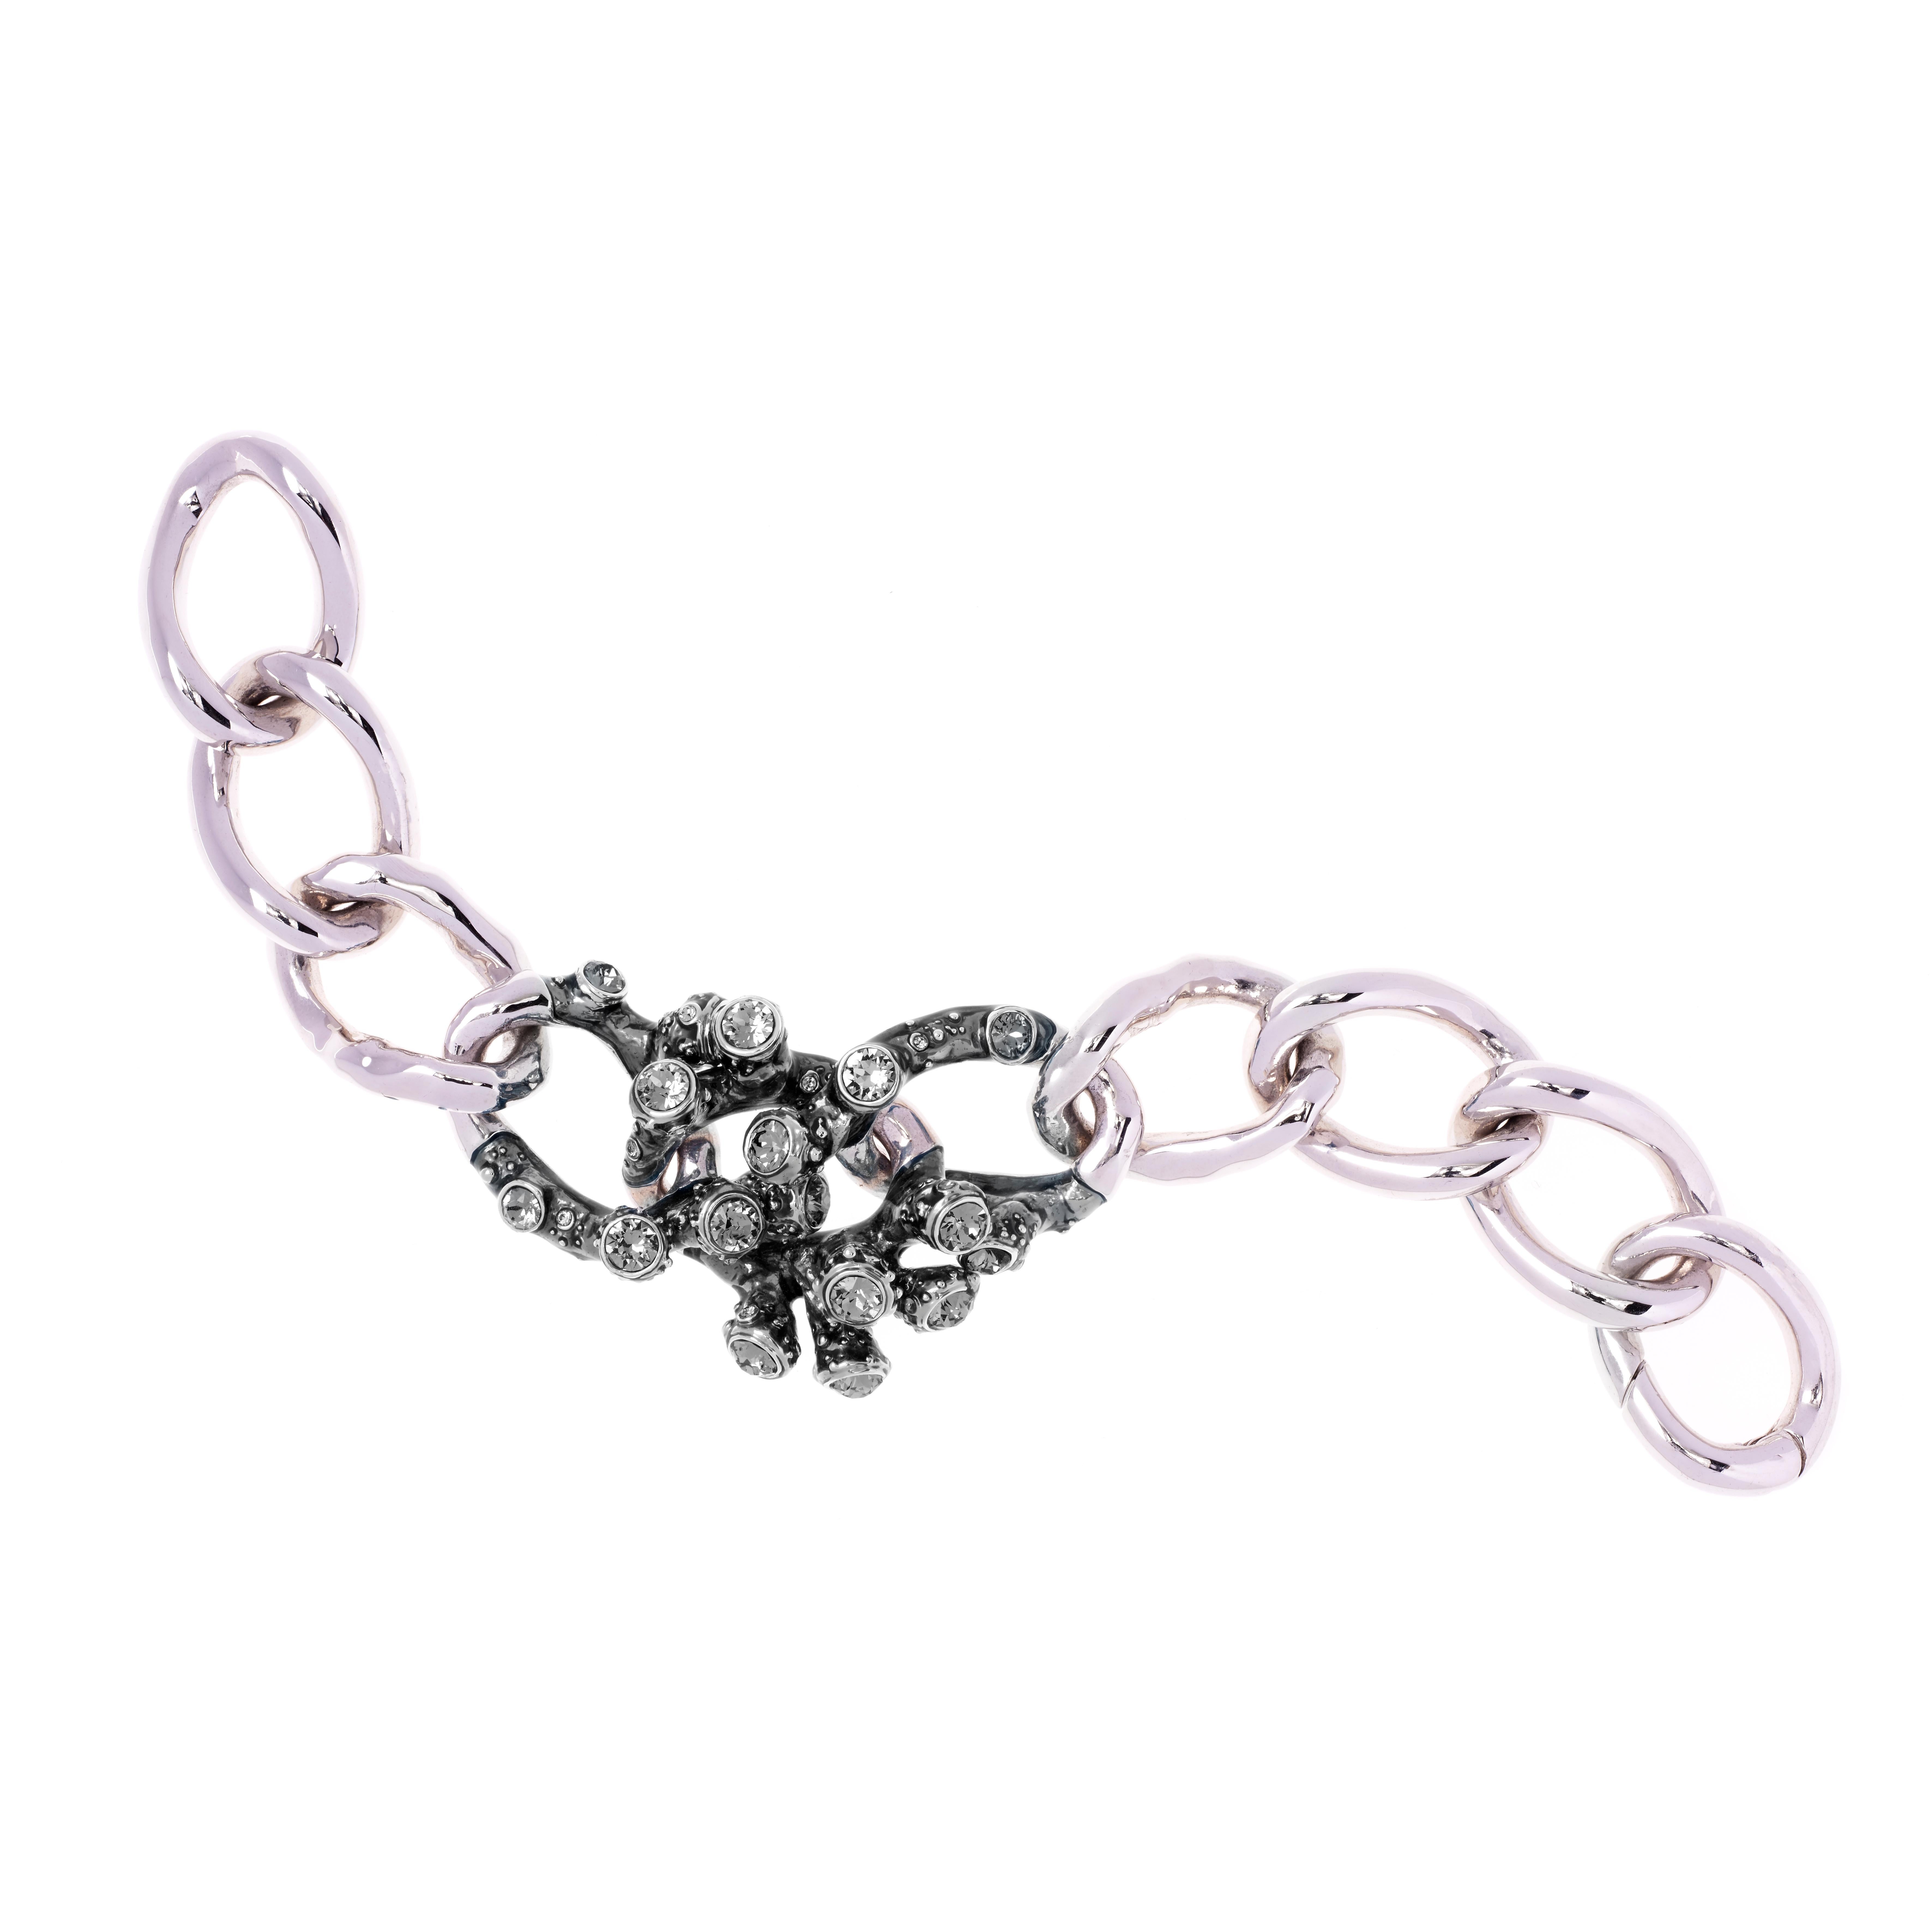 Contemporary Simon Harrison Coral Black Diamond Crystal And Enamel Chain Bracelet For Sale